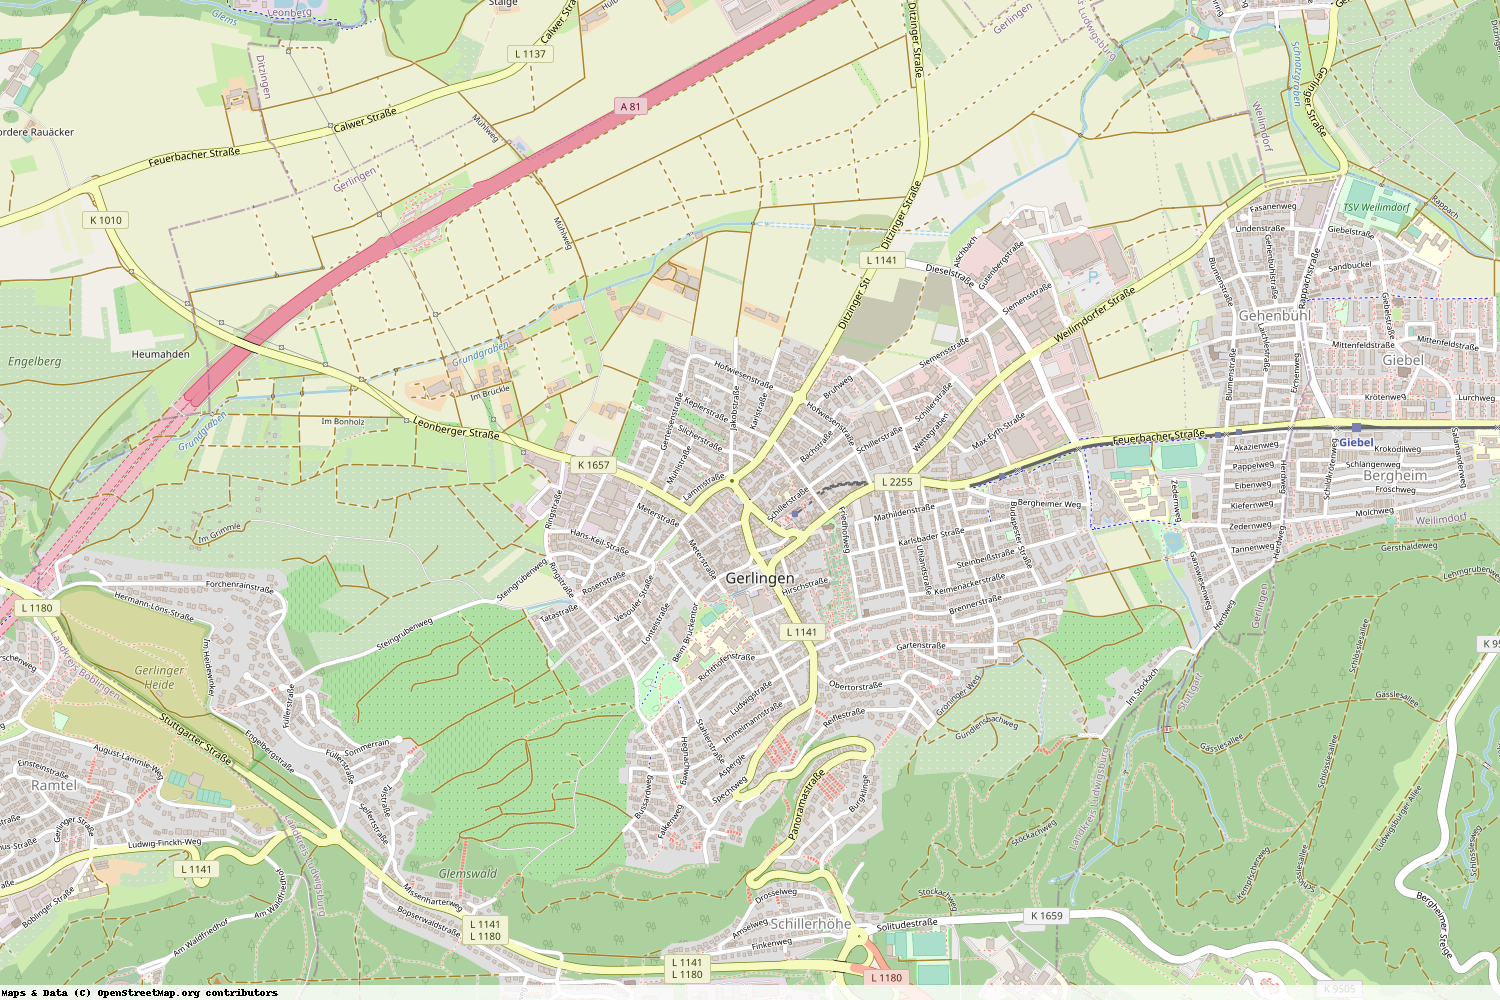 Ist gerade Stromausfall in Baden-Württemberg - Ludwigsburg - Gerlingen?